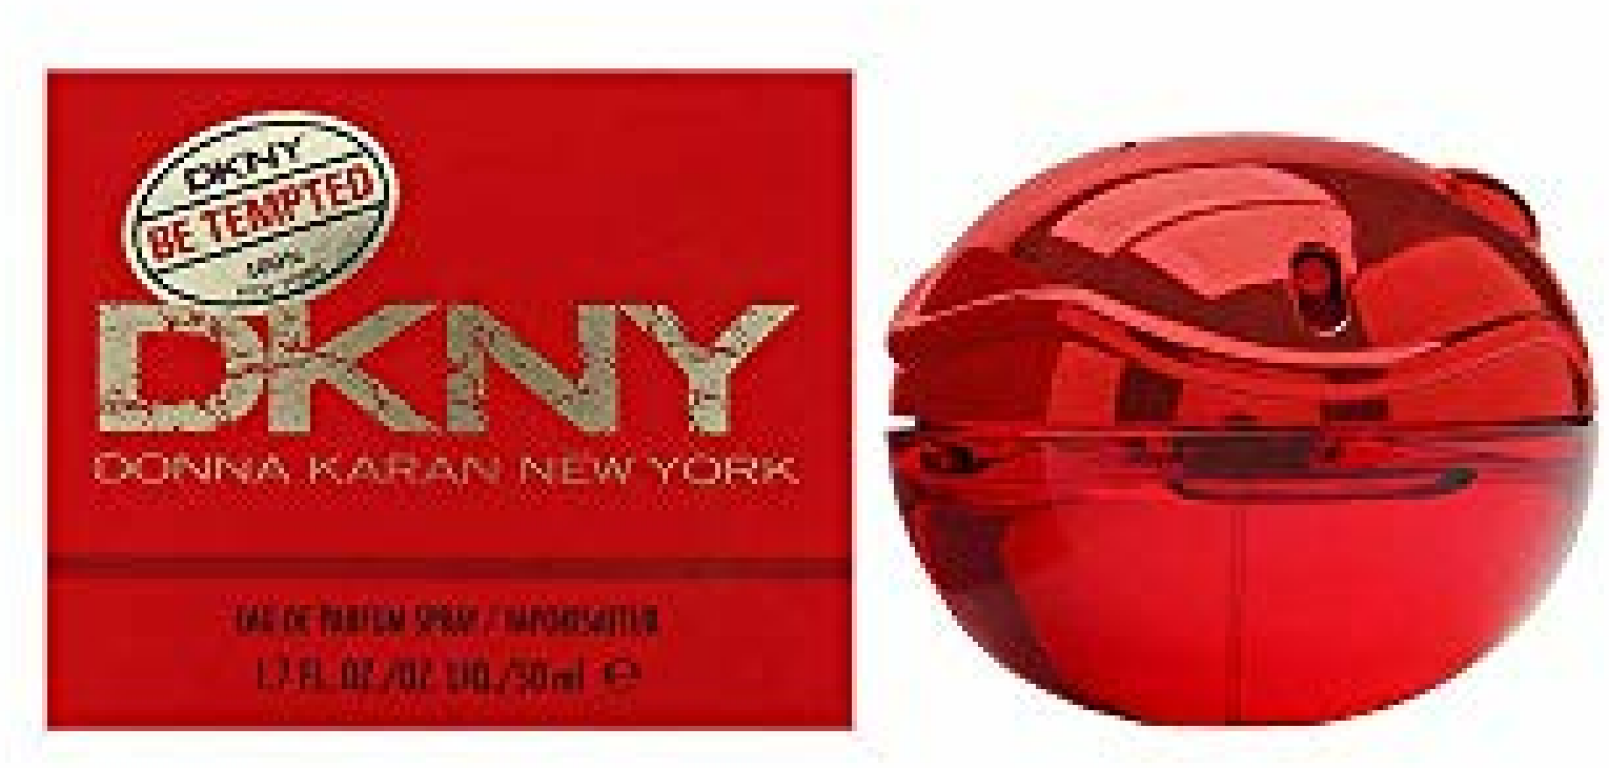 DKNY Be Tempted Eau de parfum box